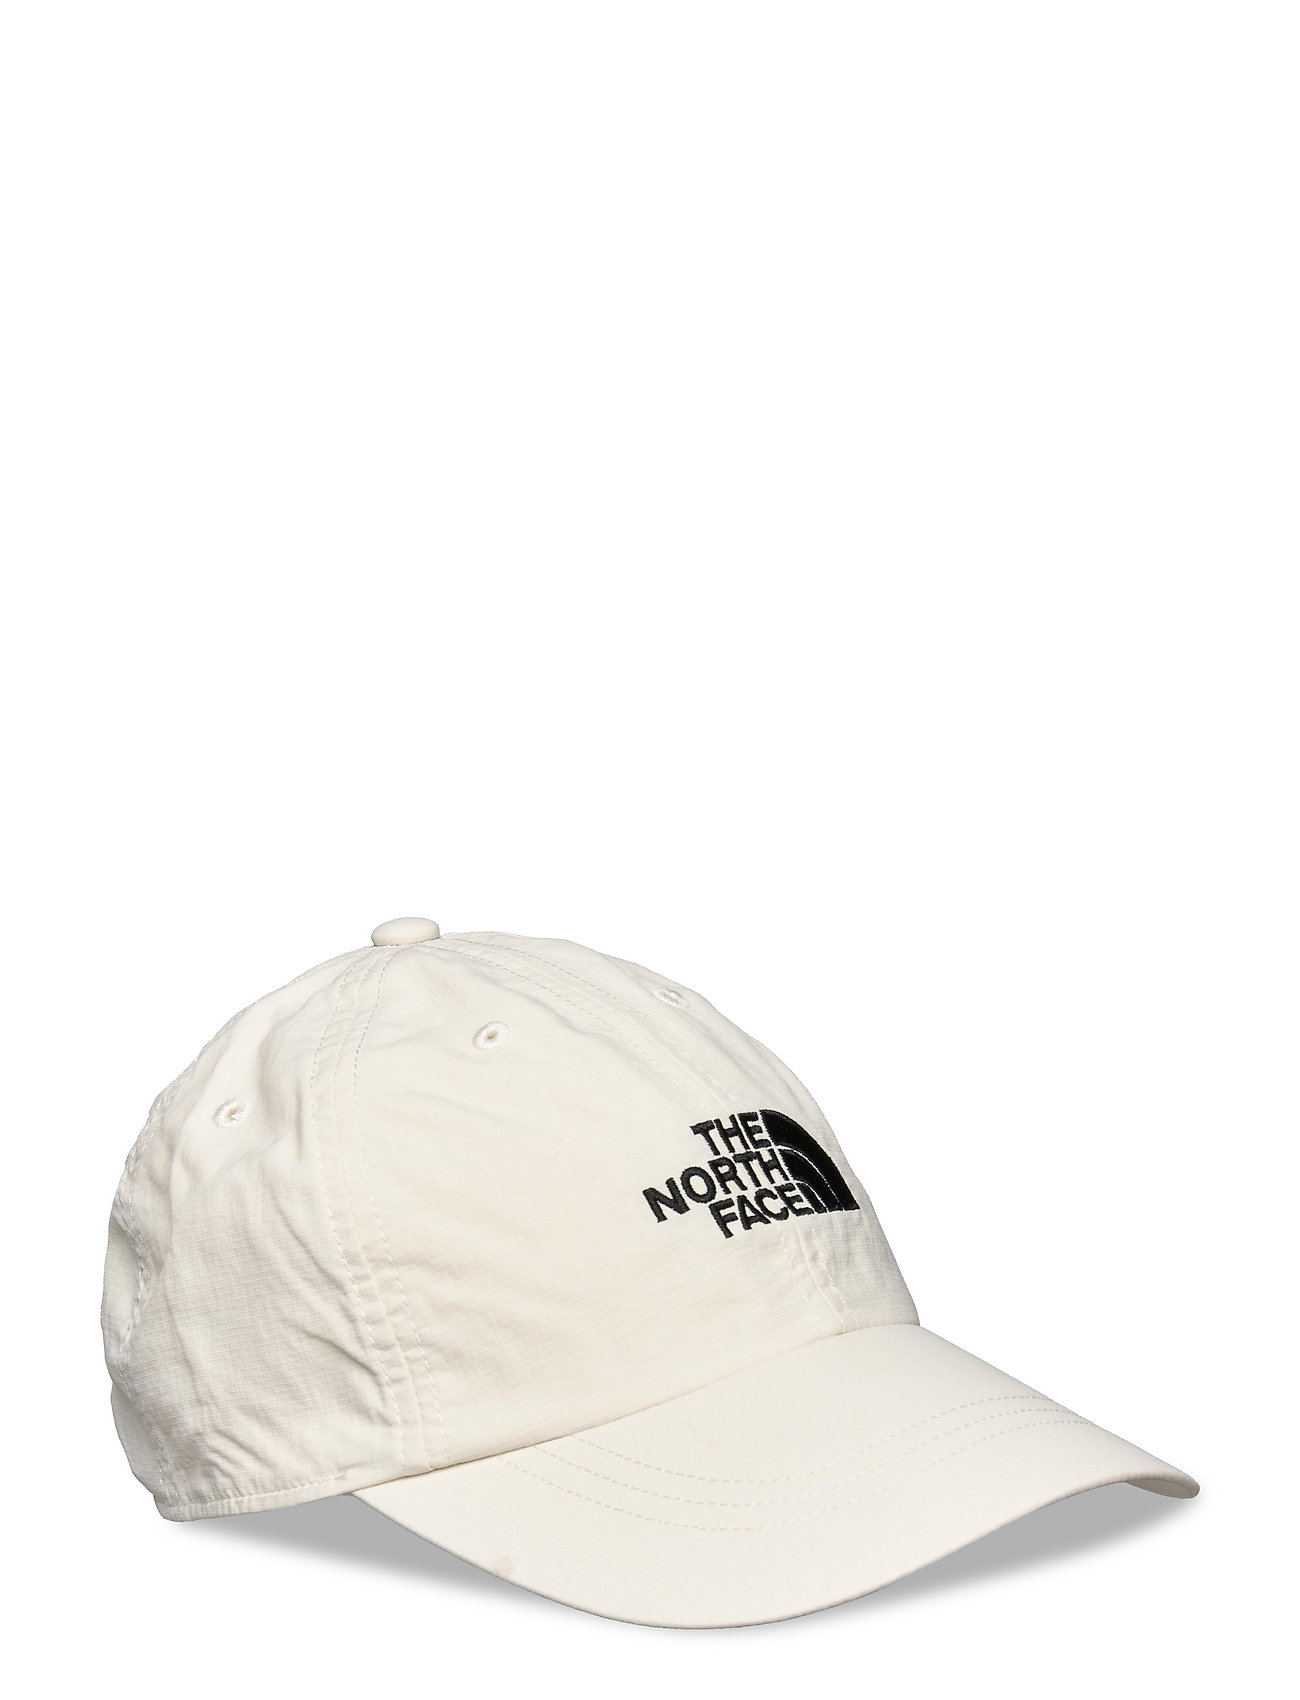 Horizon Hat Accessories Headwear Caps Valkoinen The North Face